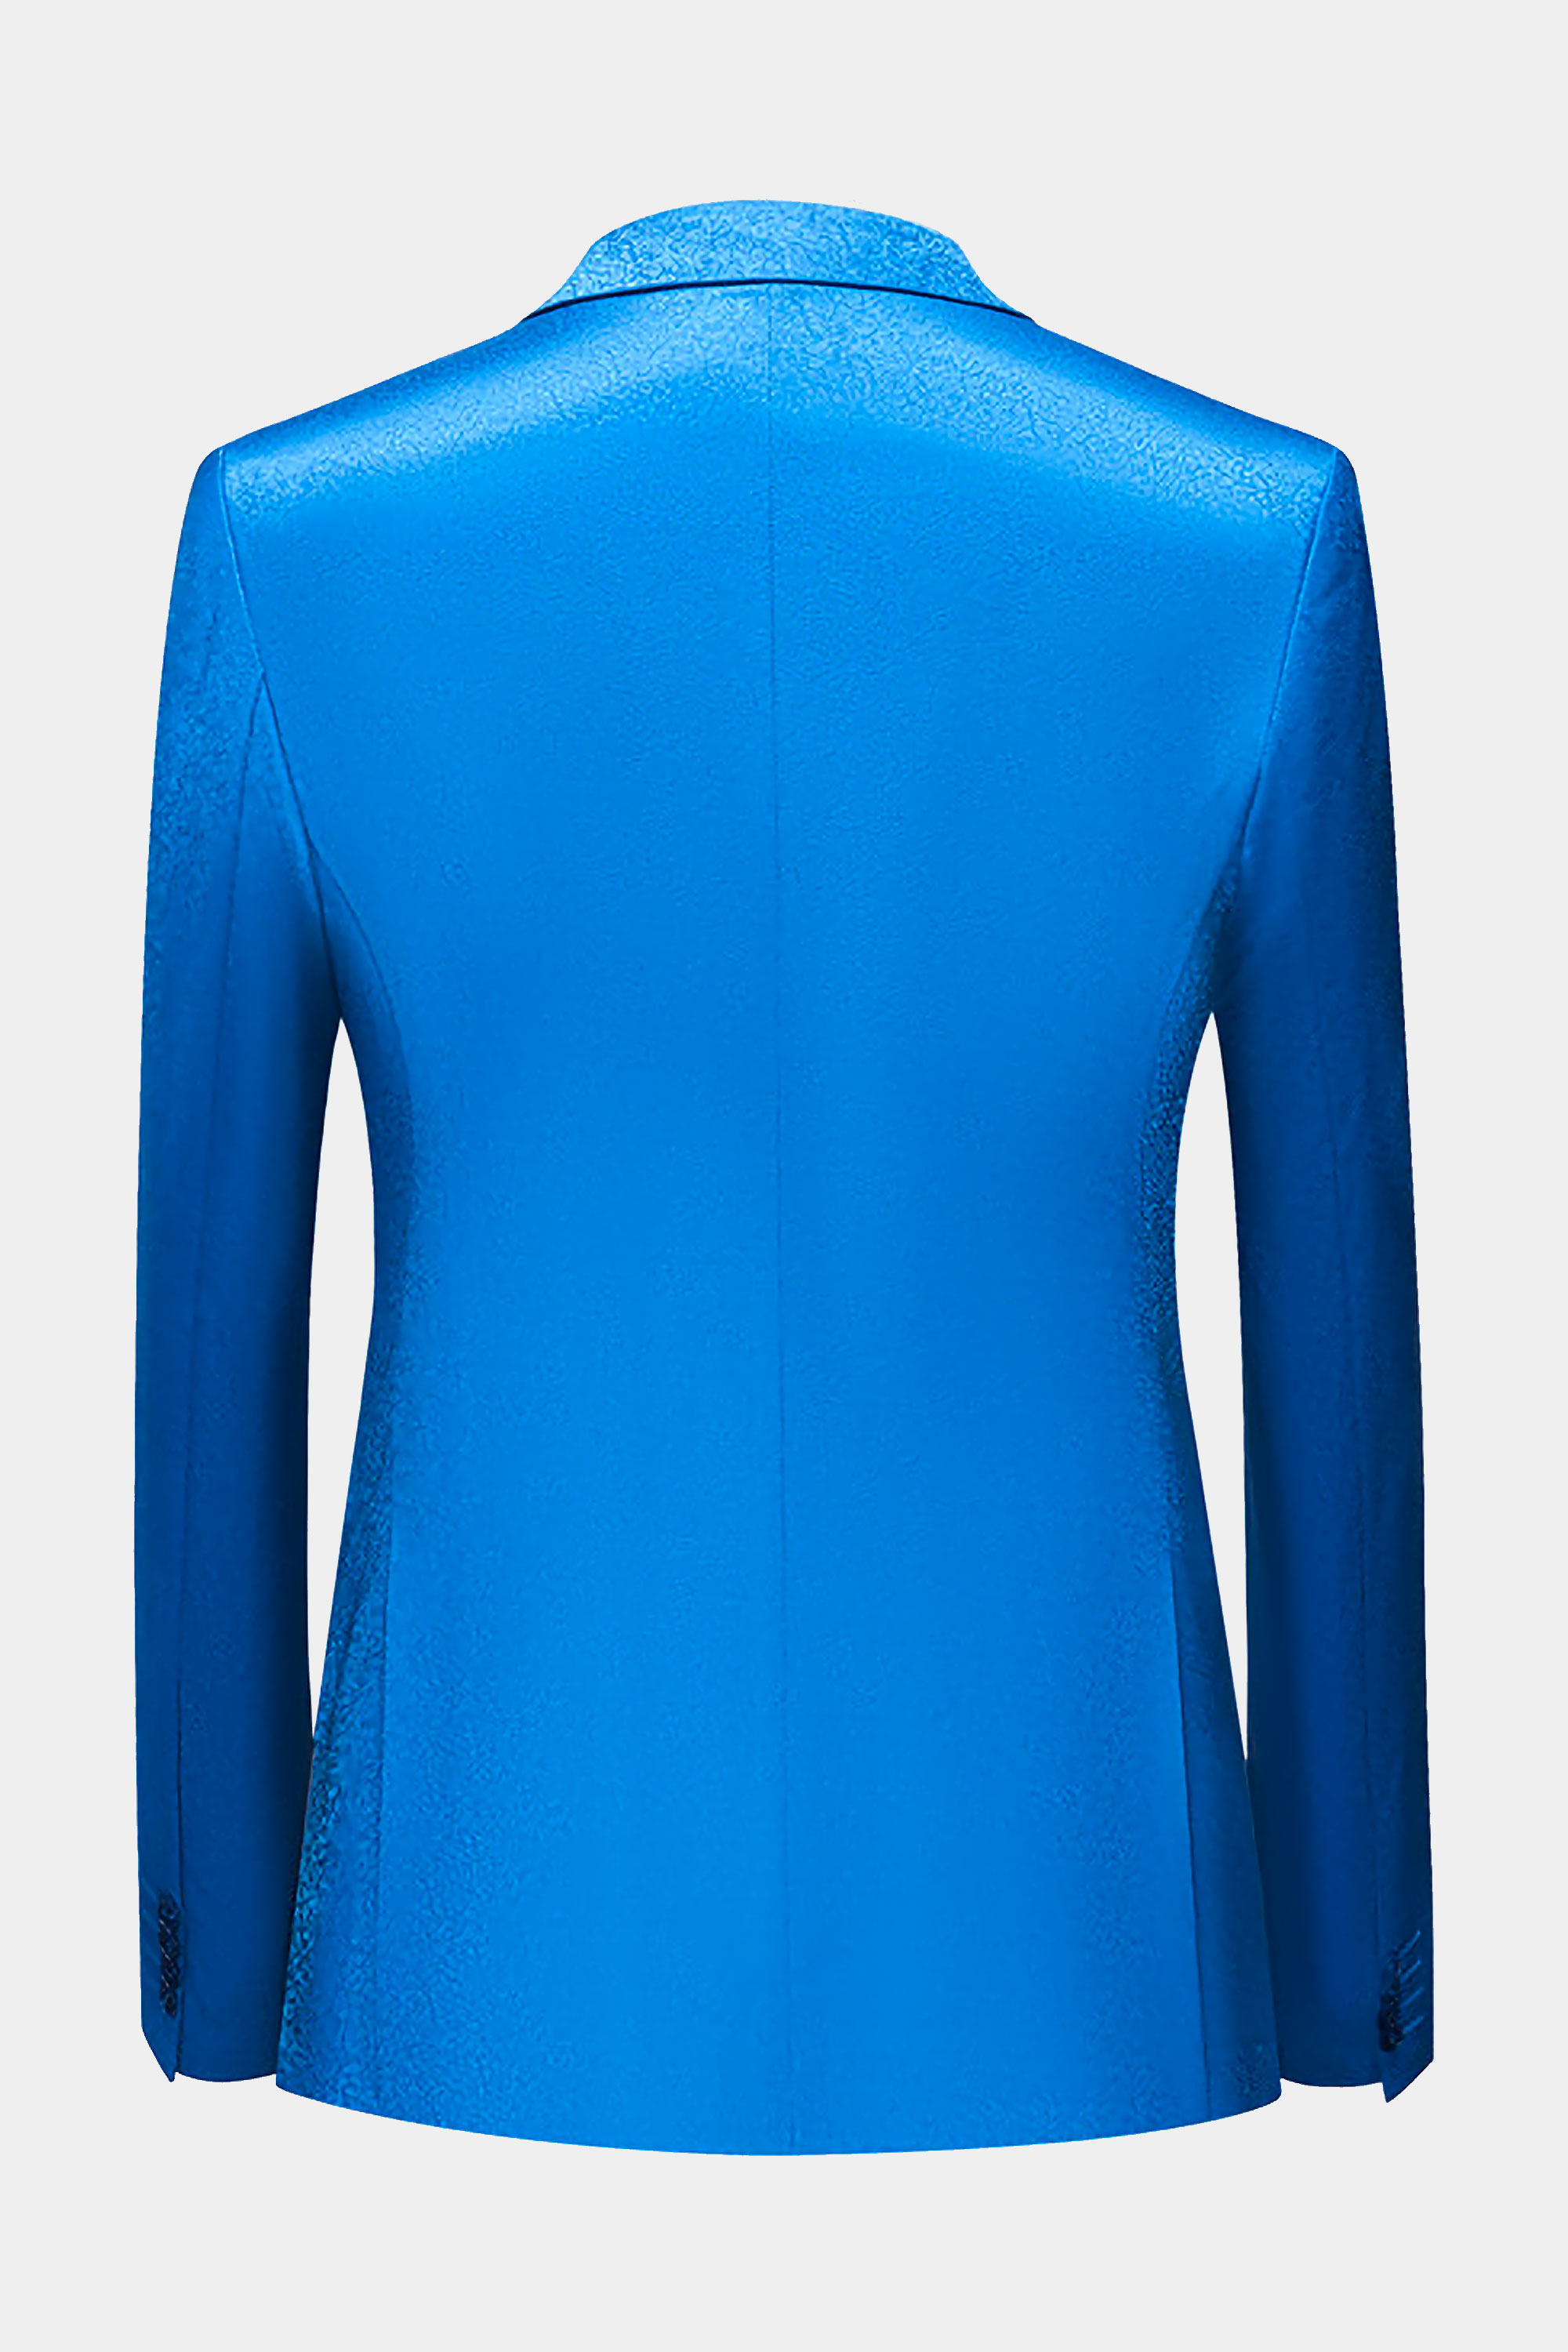 Double-Breasted-Blue-Suit-Jacket-Prom-Blazer-from-Gentlemansguru.com